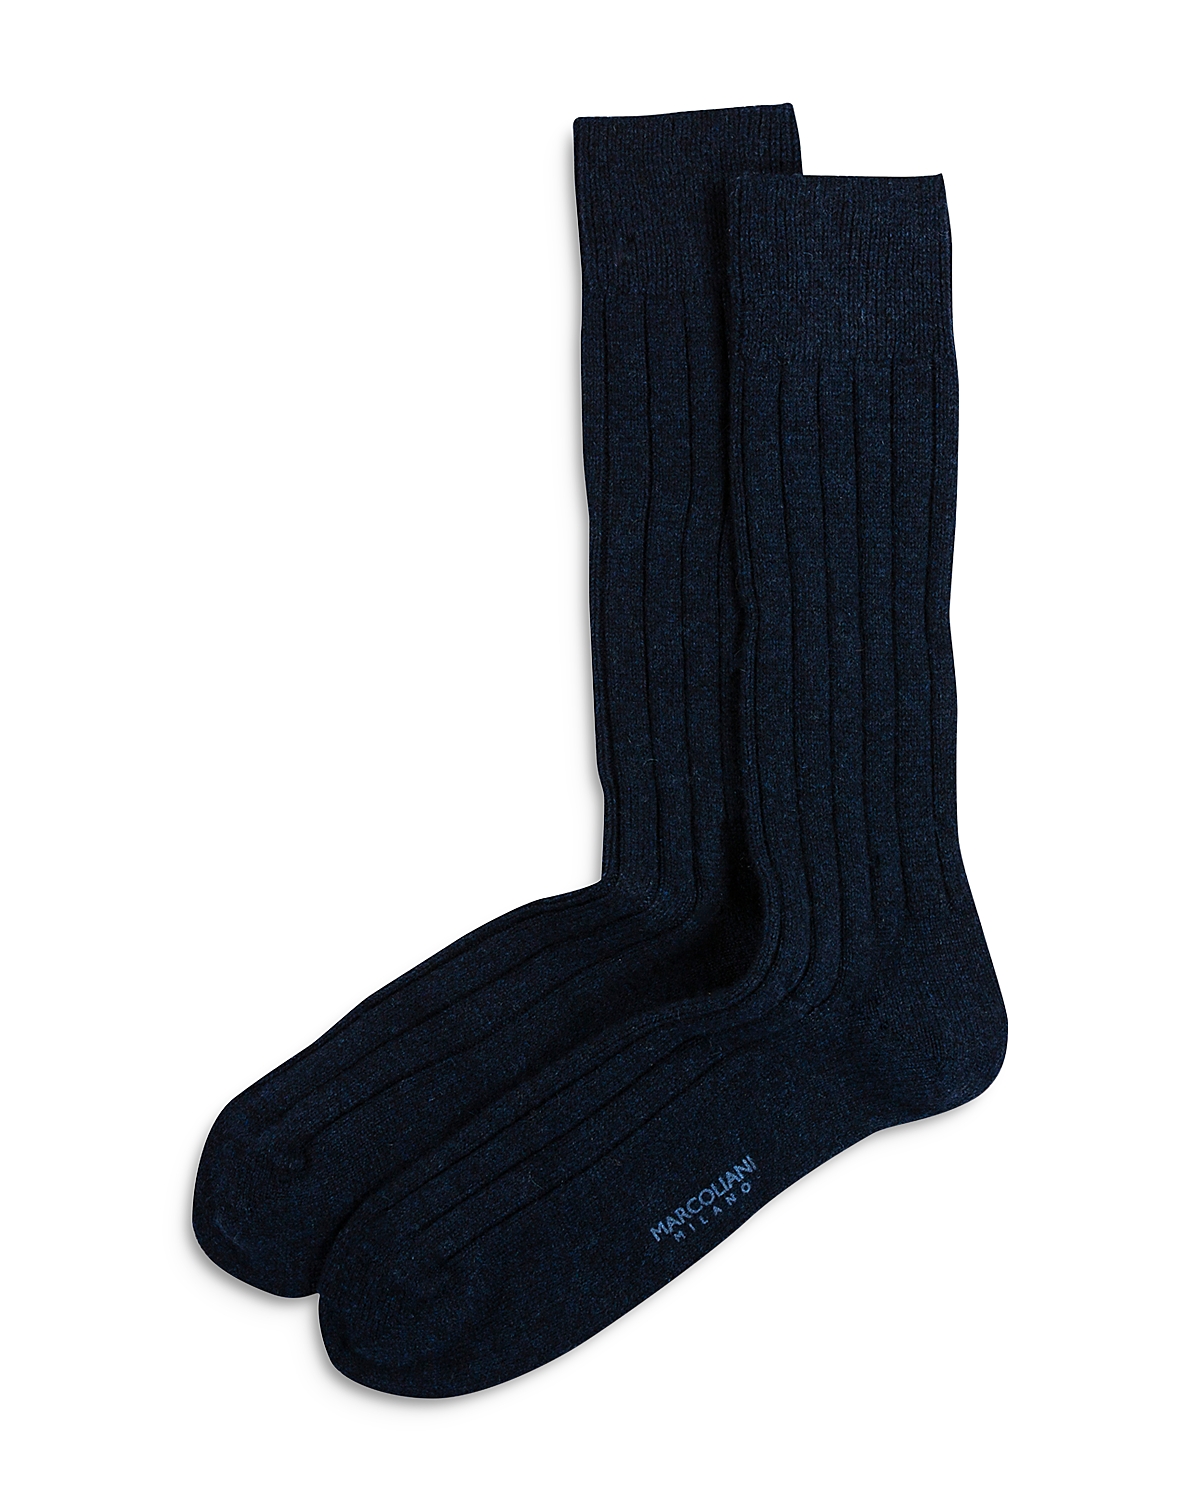 Marcoliani Ribbed Dress Socks $26.25